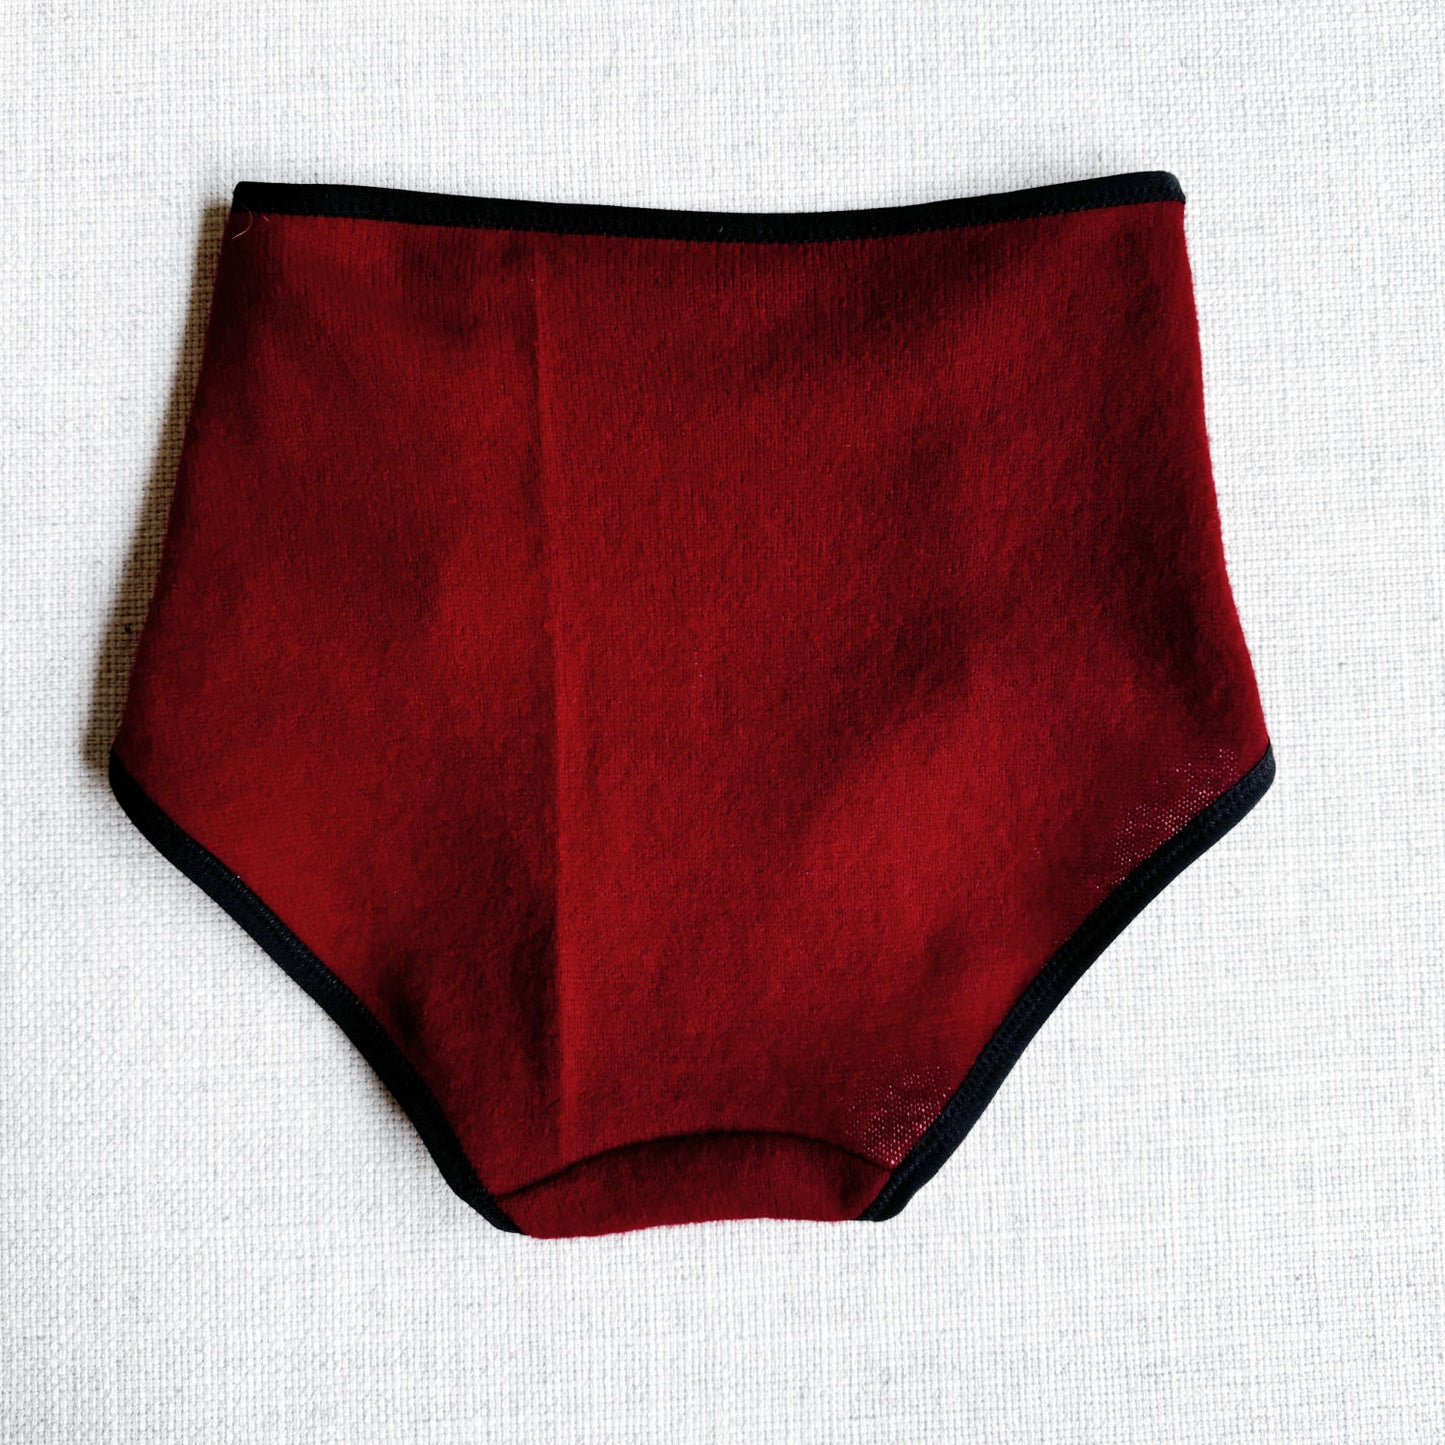 100% red cashmere panties for women, luxury underwear 